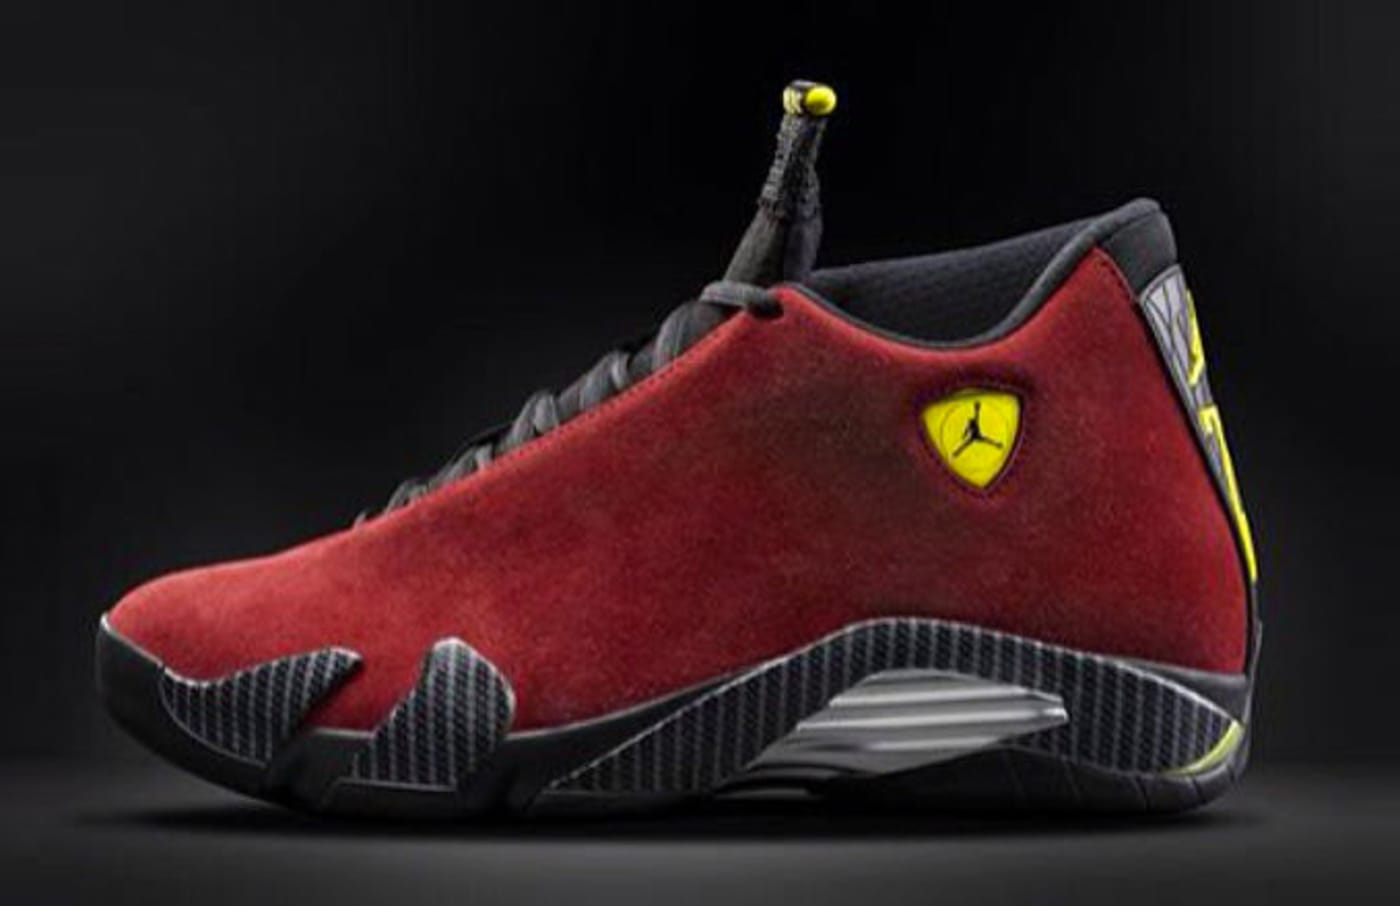 Air Jordan XIV “Ferrari” Release Date 